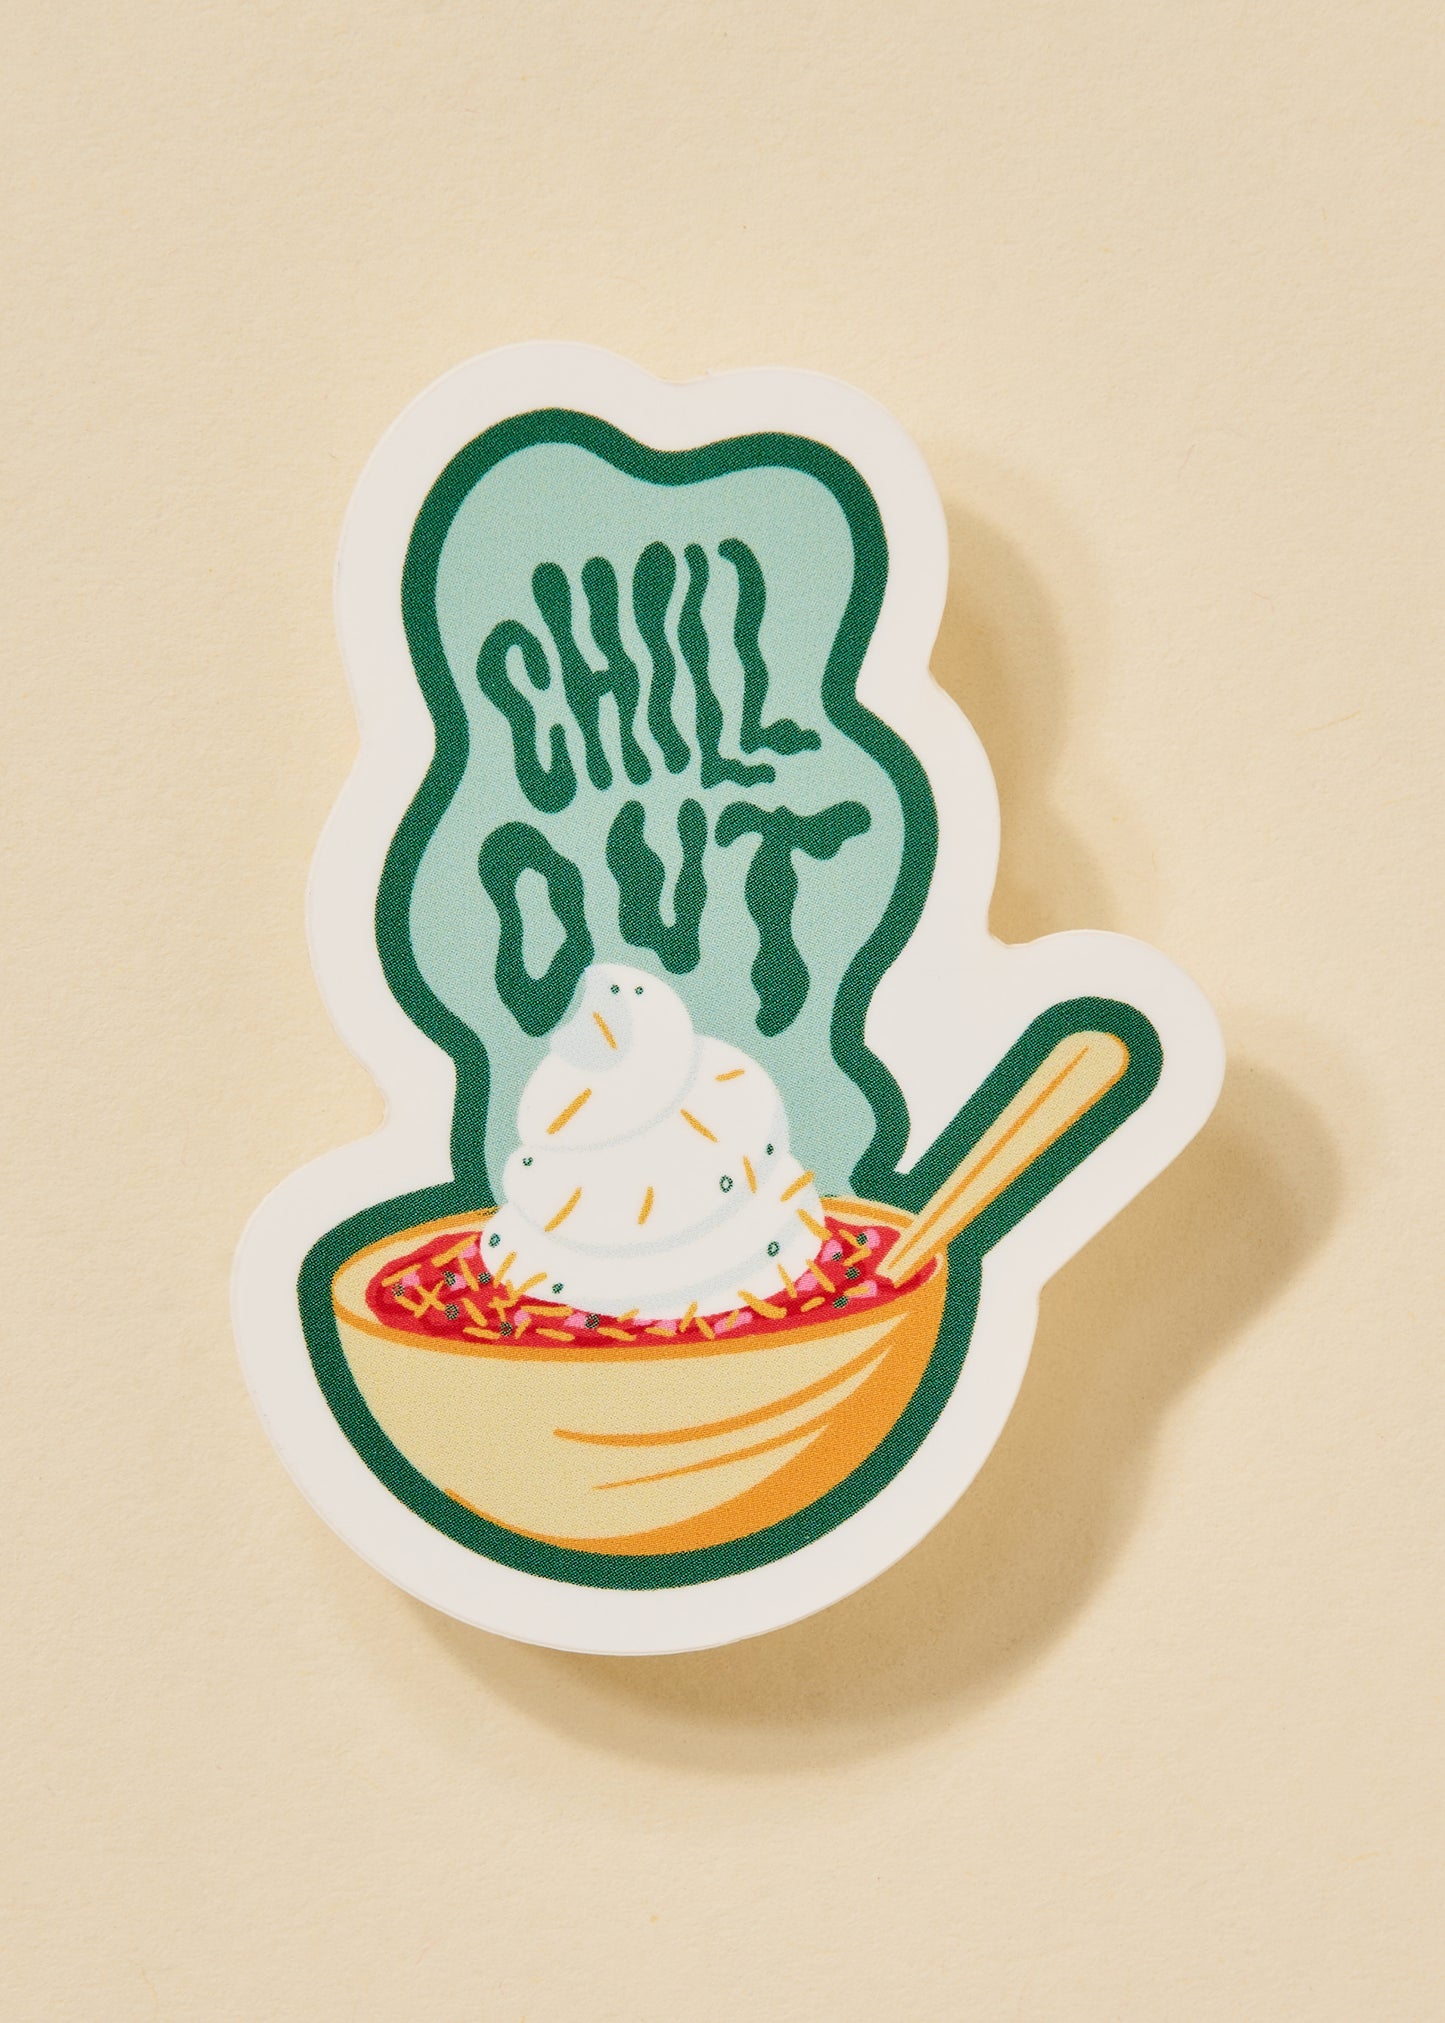 Chill Out Chili Sticker